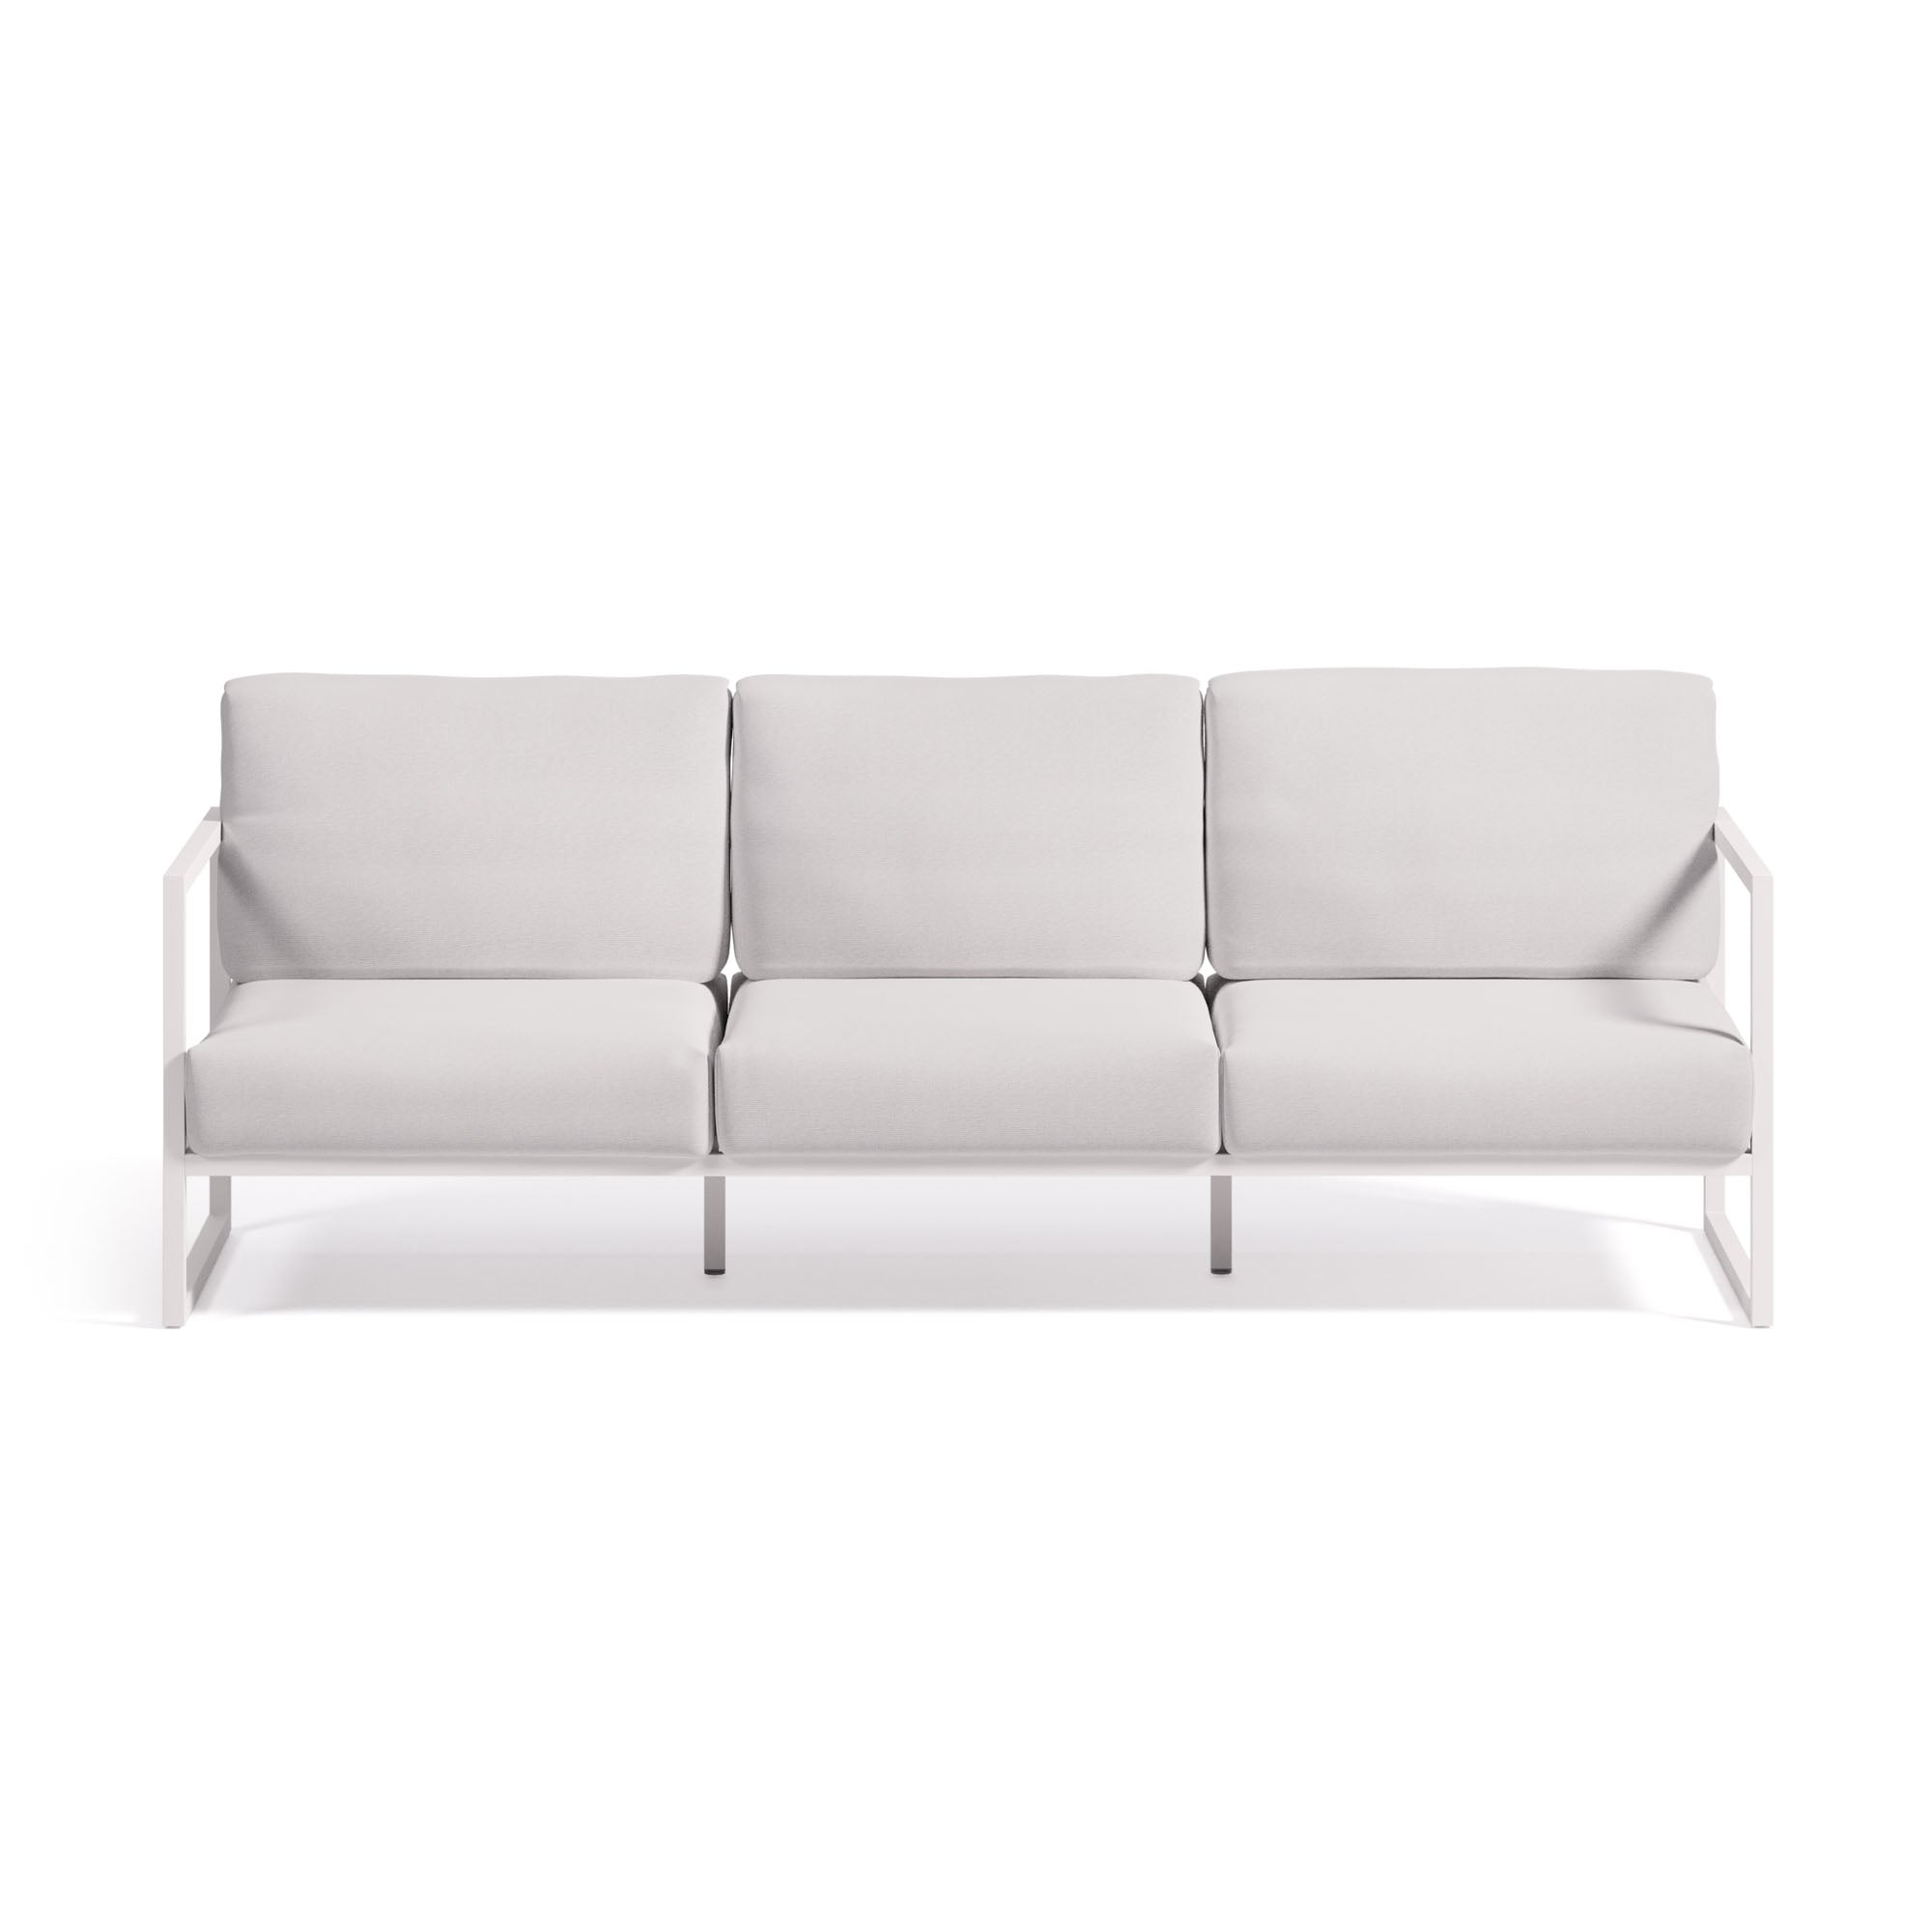 Comova 100% outdoor 3-seater sofa in white and white aluminium, 222 cm